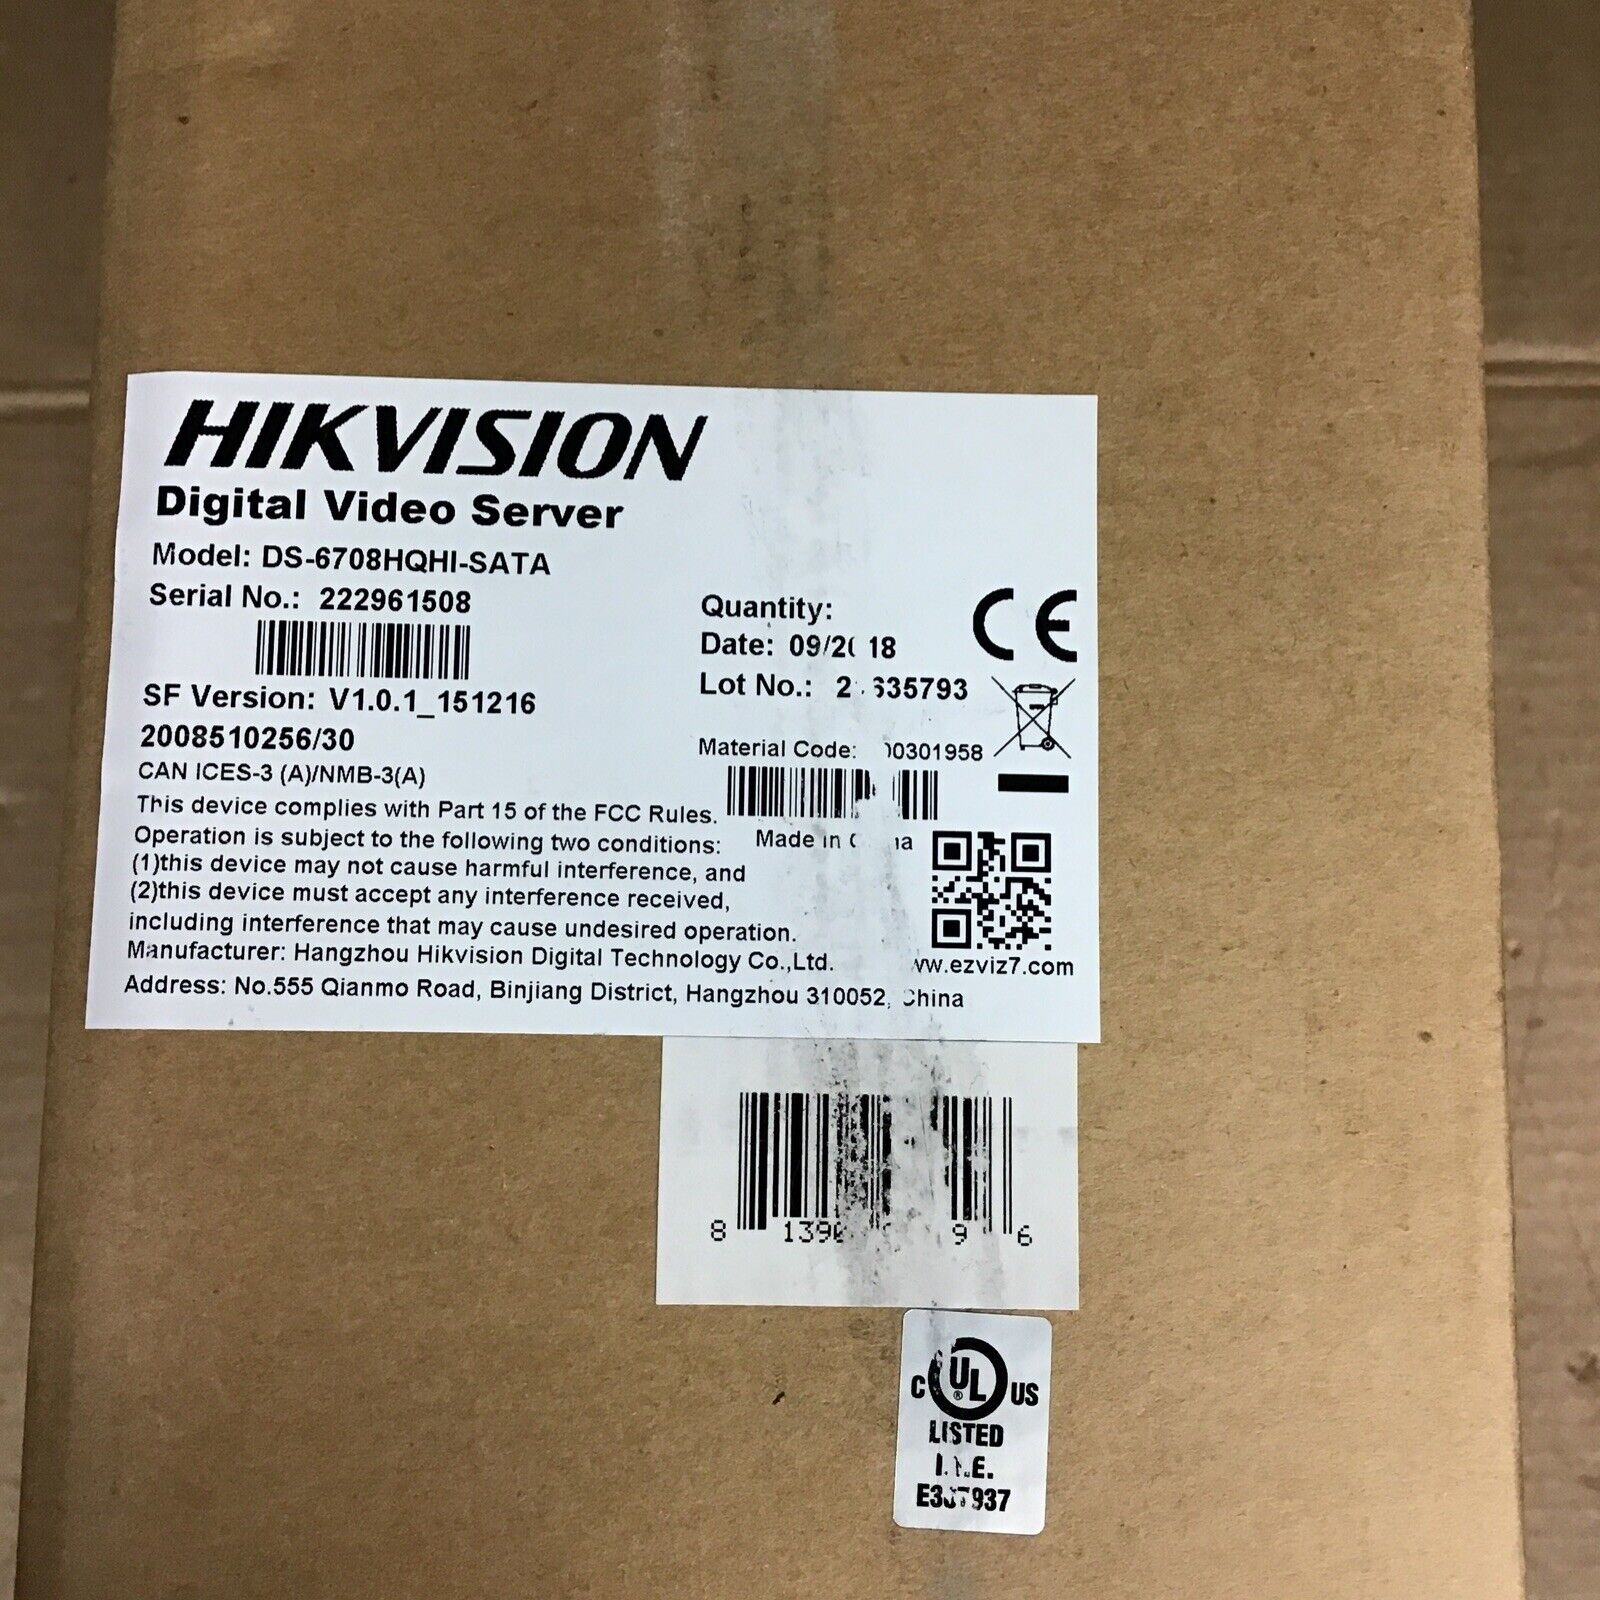 Hikvision DS-6708HQHI-SATA 8 Channel Video Server, Dual Stream, HD-TVI/CVB, AUDI